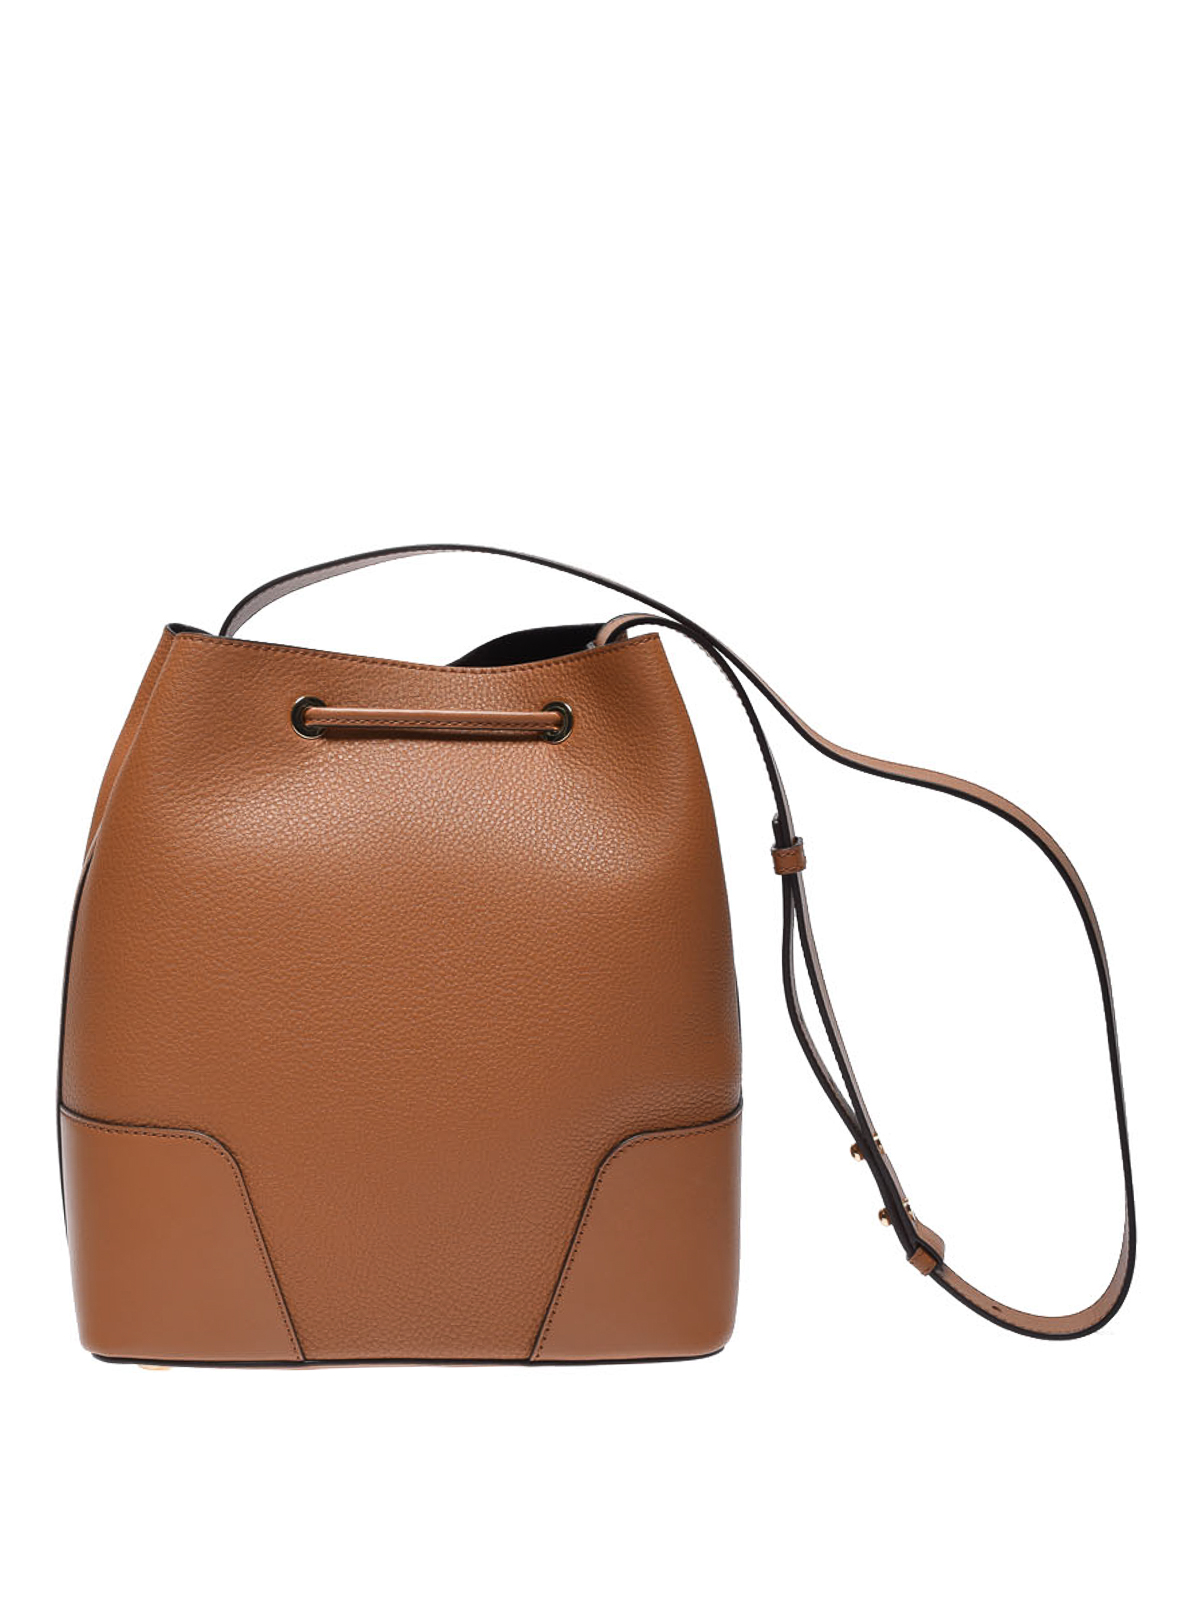 MICHAEL Michael Kors Bucket bags and bucket purses for Women